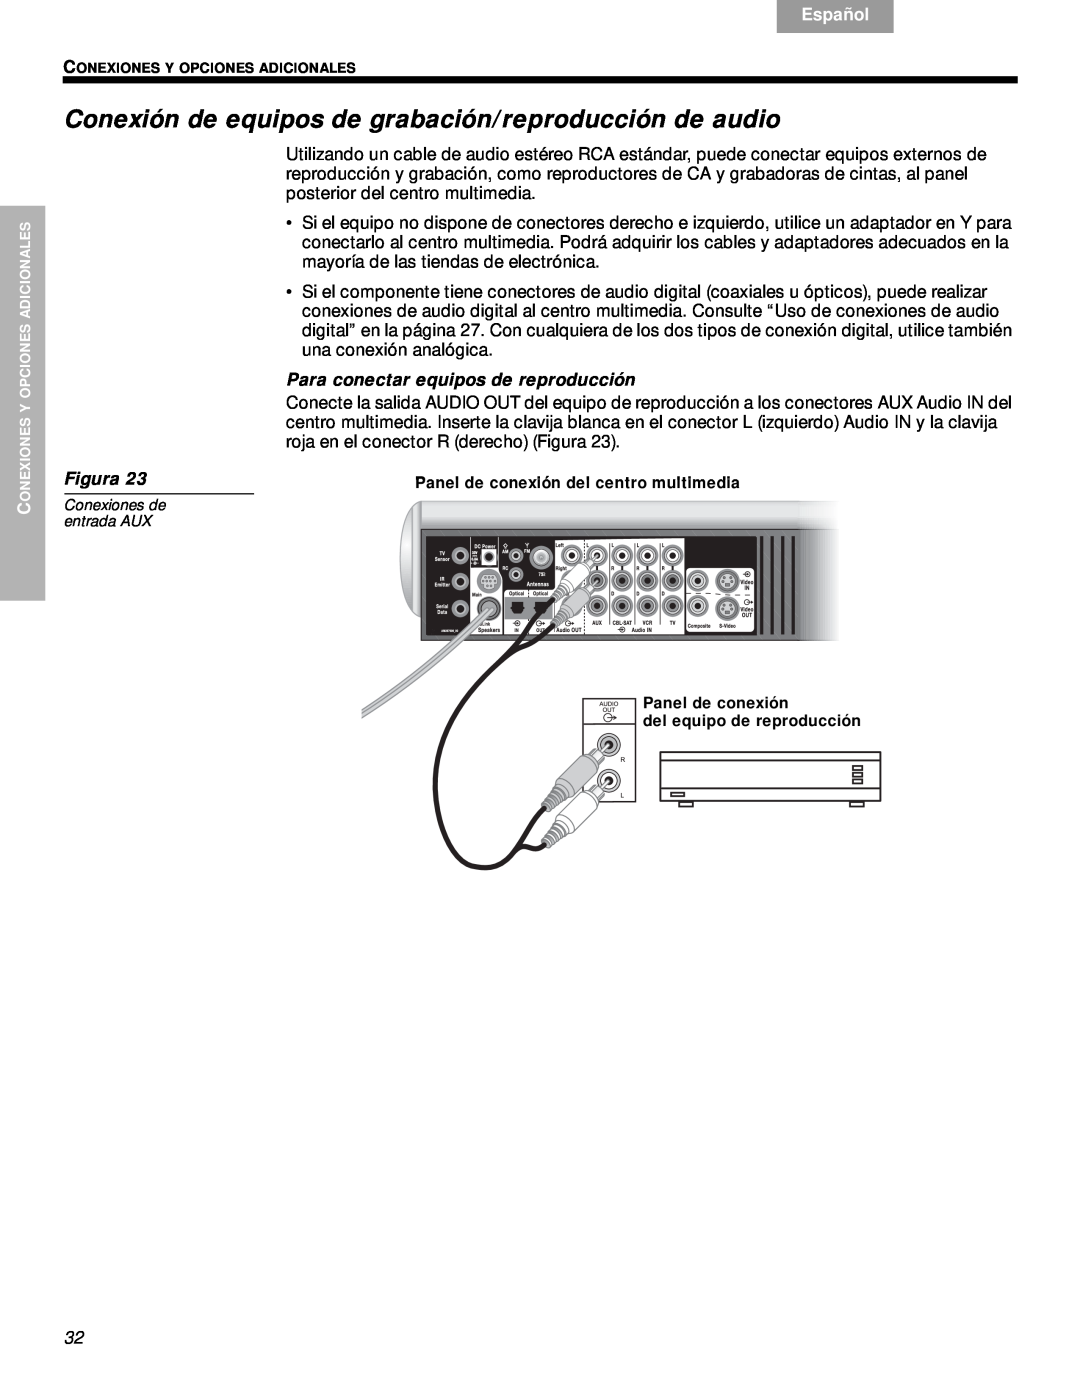 Bose VS-2 manual Para conectar equipos de reproducción, Svenska, Nederlands, Français, Español, English, Figura 